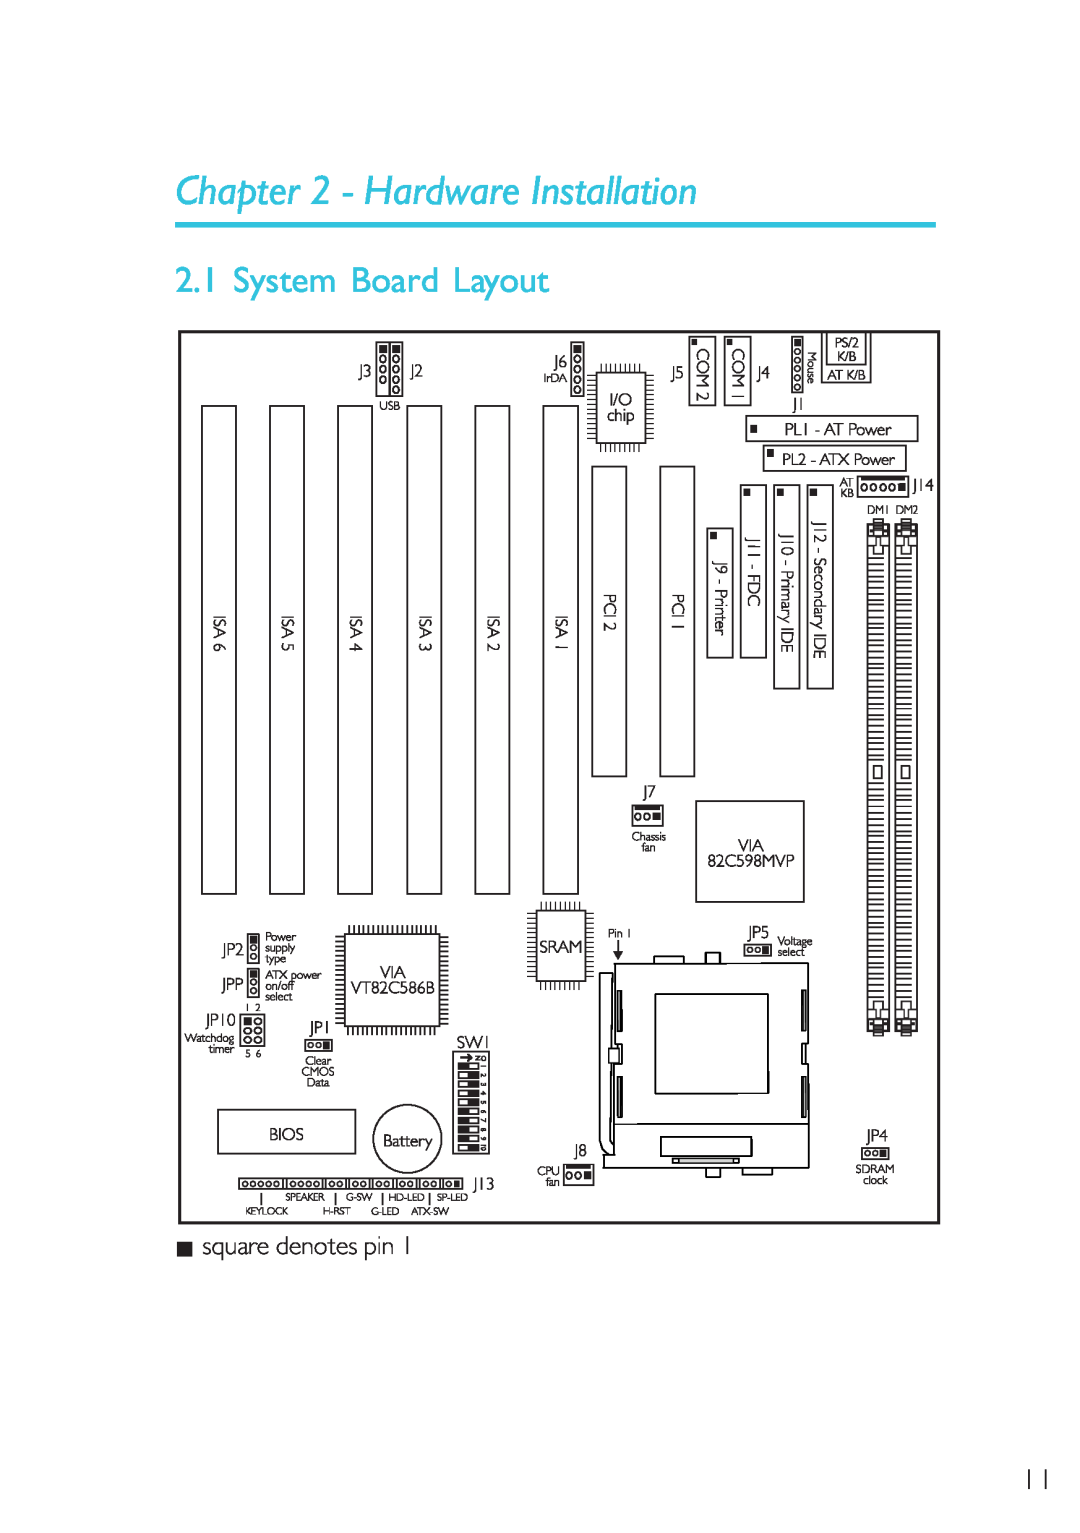 Microsoft G7VP2 manual Hardware Installation, System Board Layout 